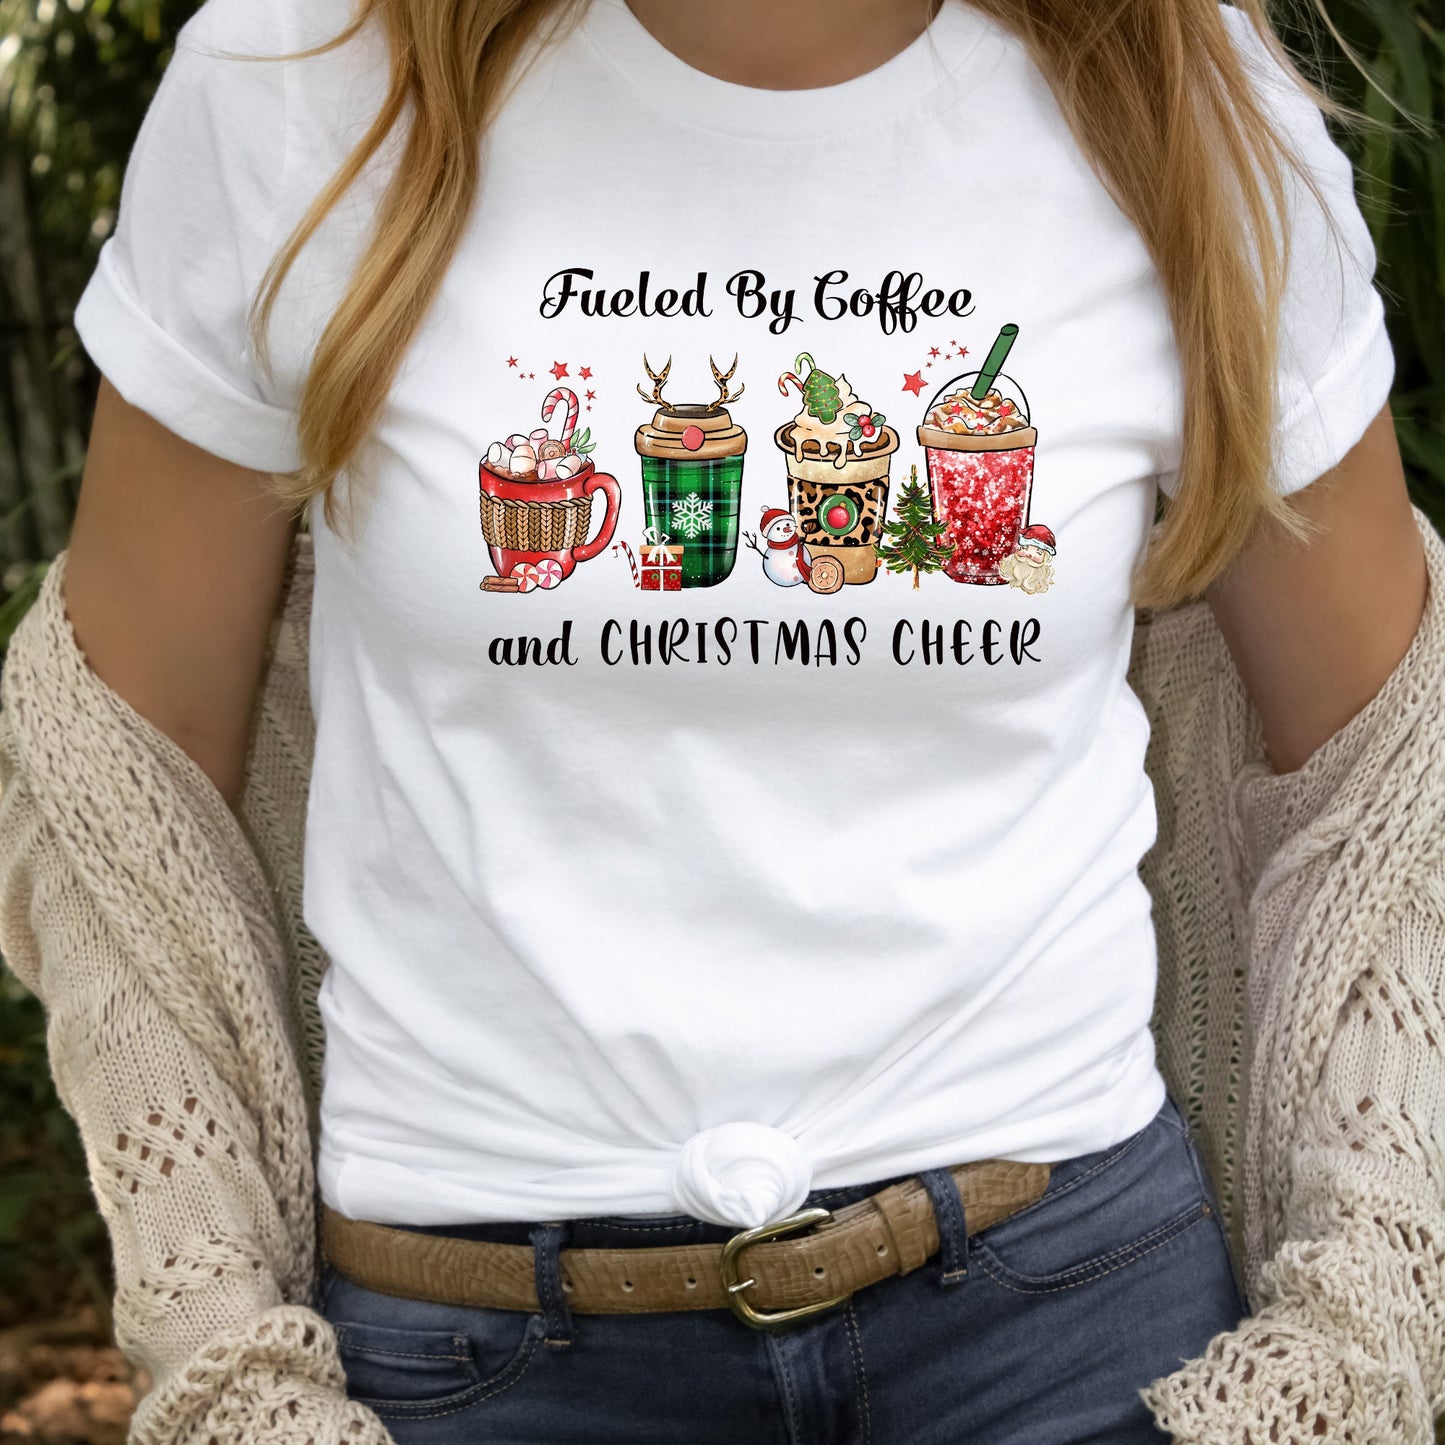 Women's Christmas T-Shirt